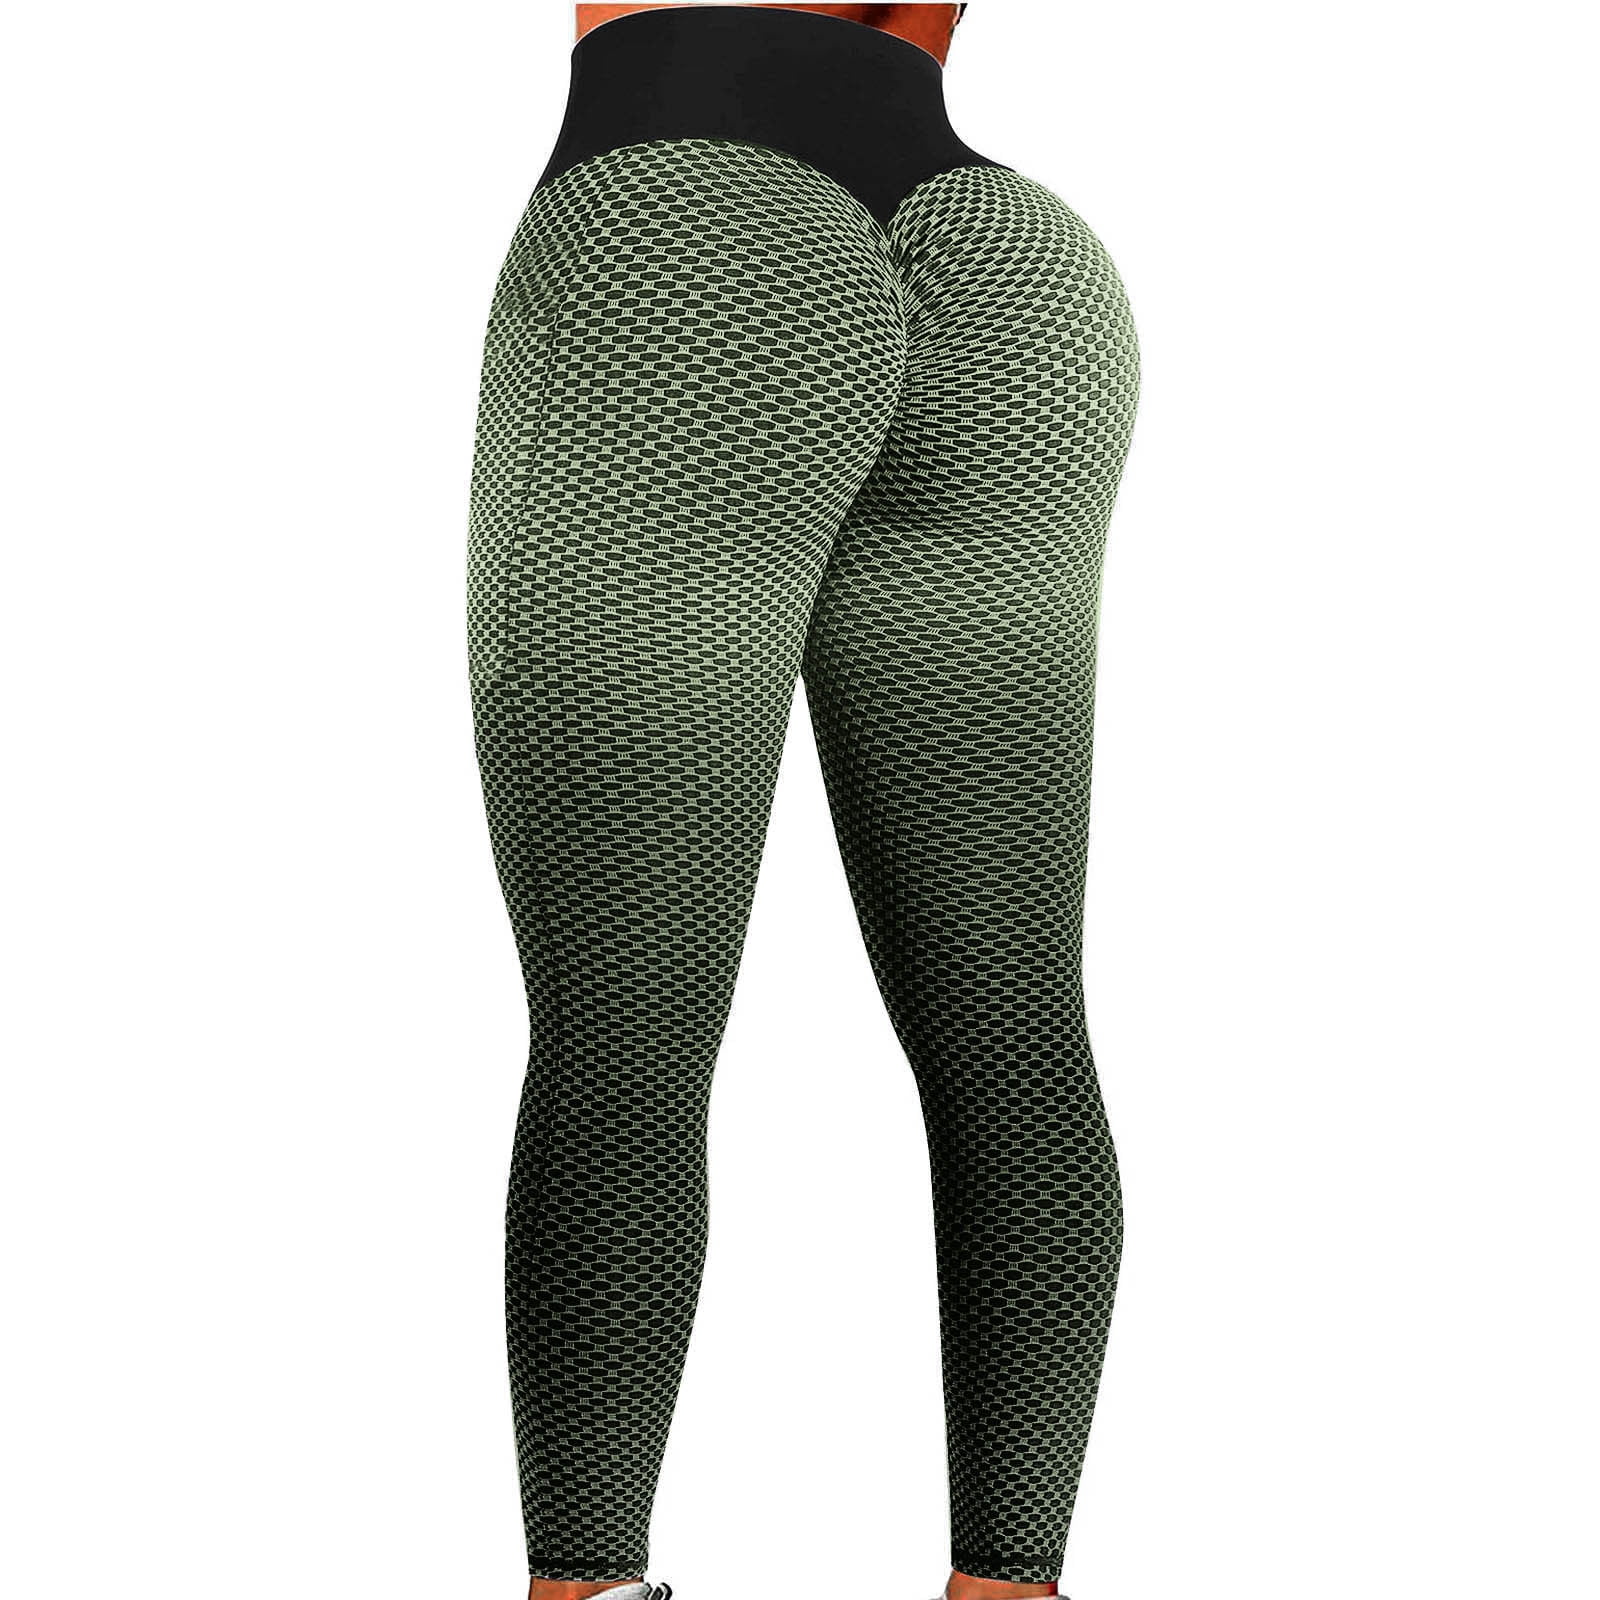 Efsteb High Waist Yoga Pants with Pockets Women Athletic Sport